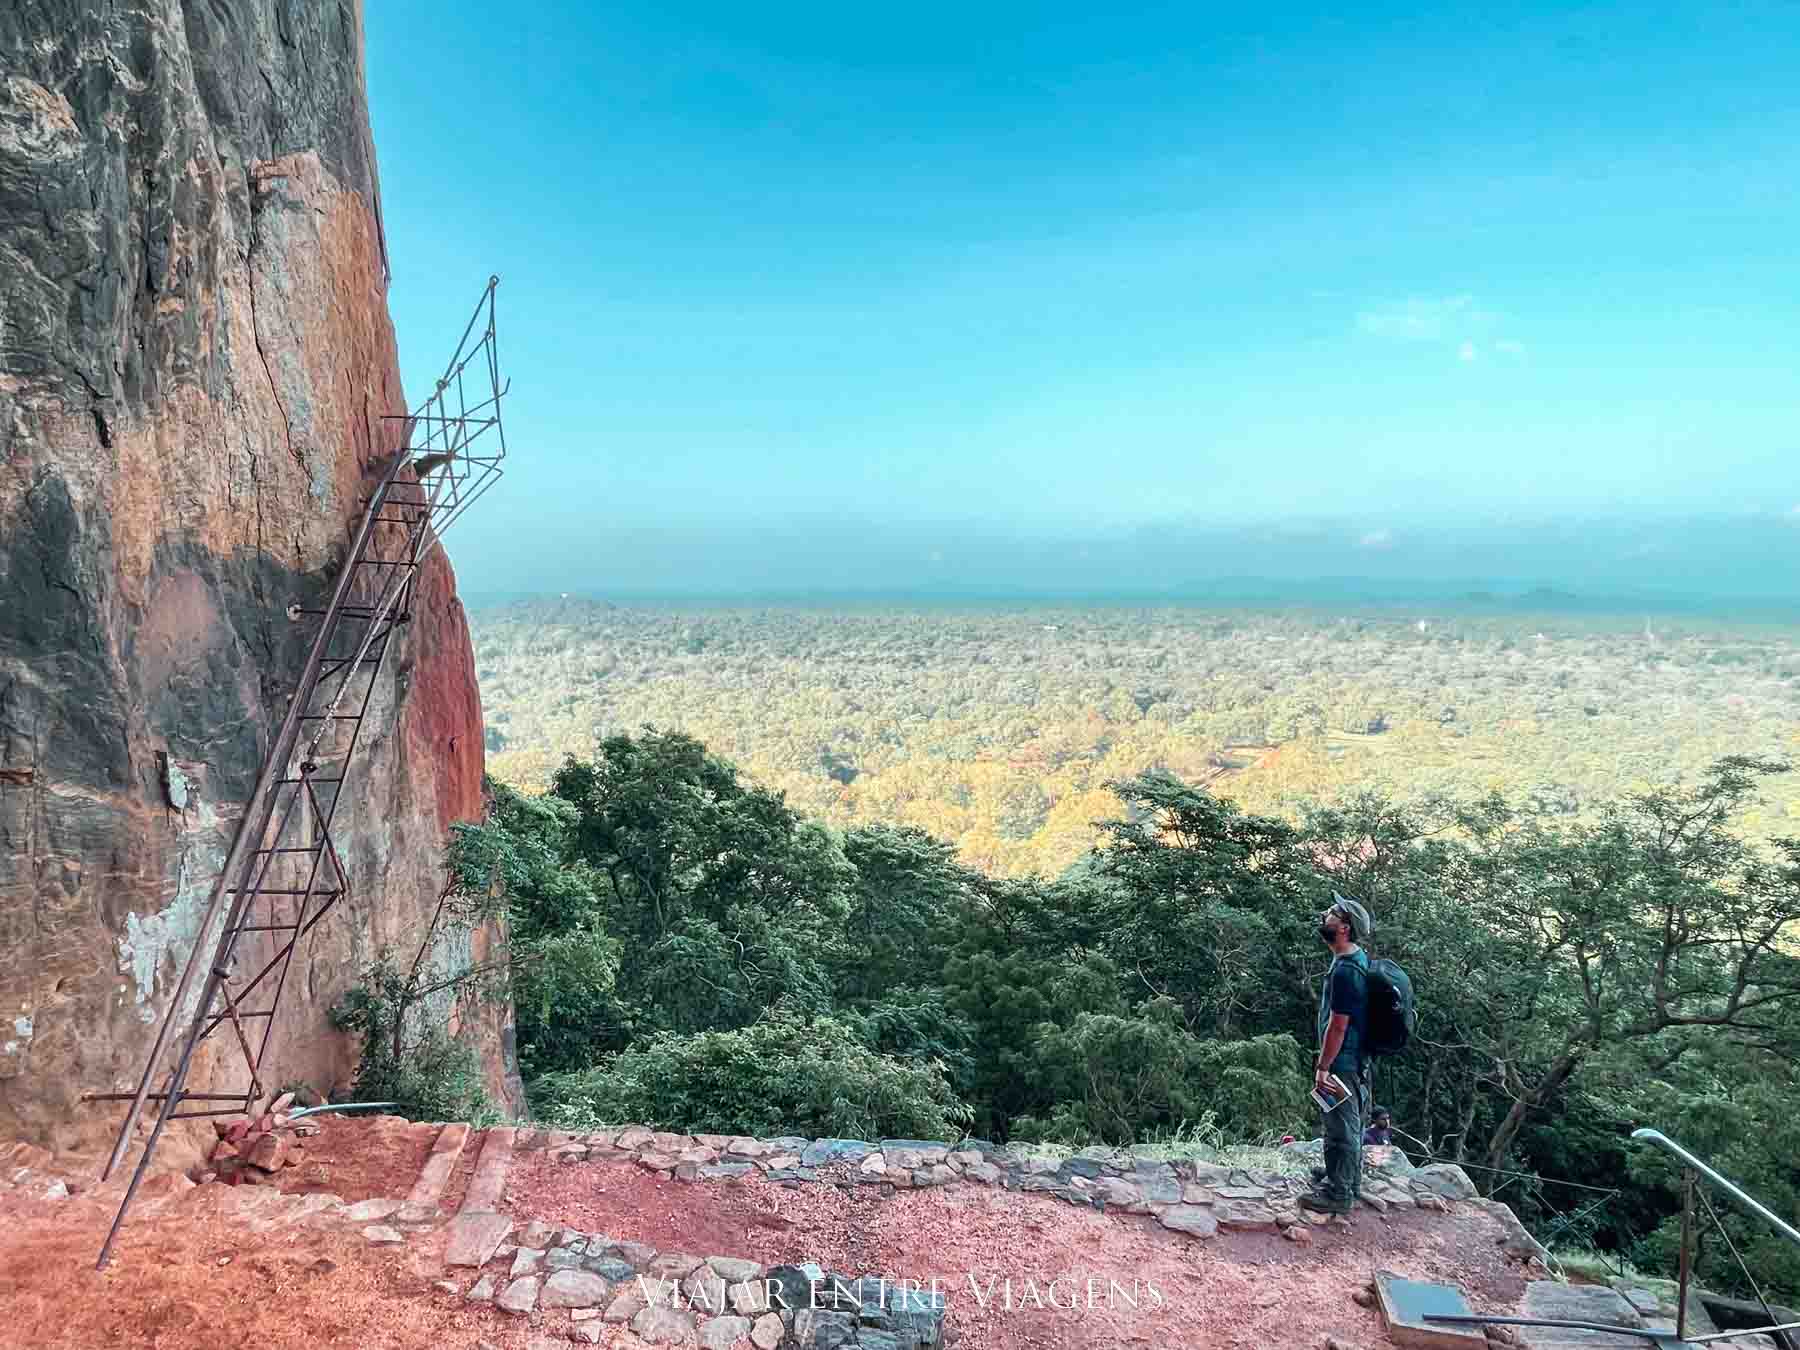 VISITAR SIGIRIYA - A fortaleza rochosa no centro do Sri Lanka